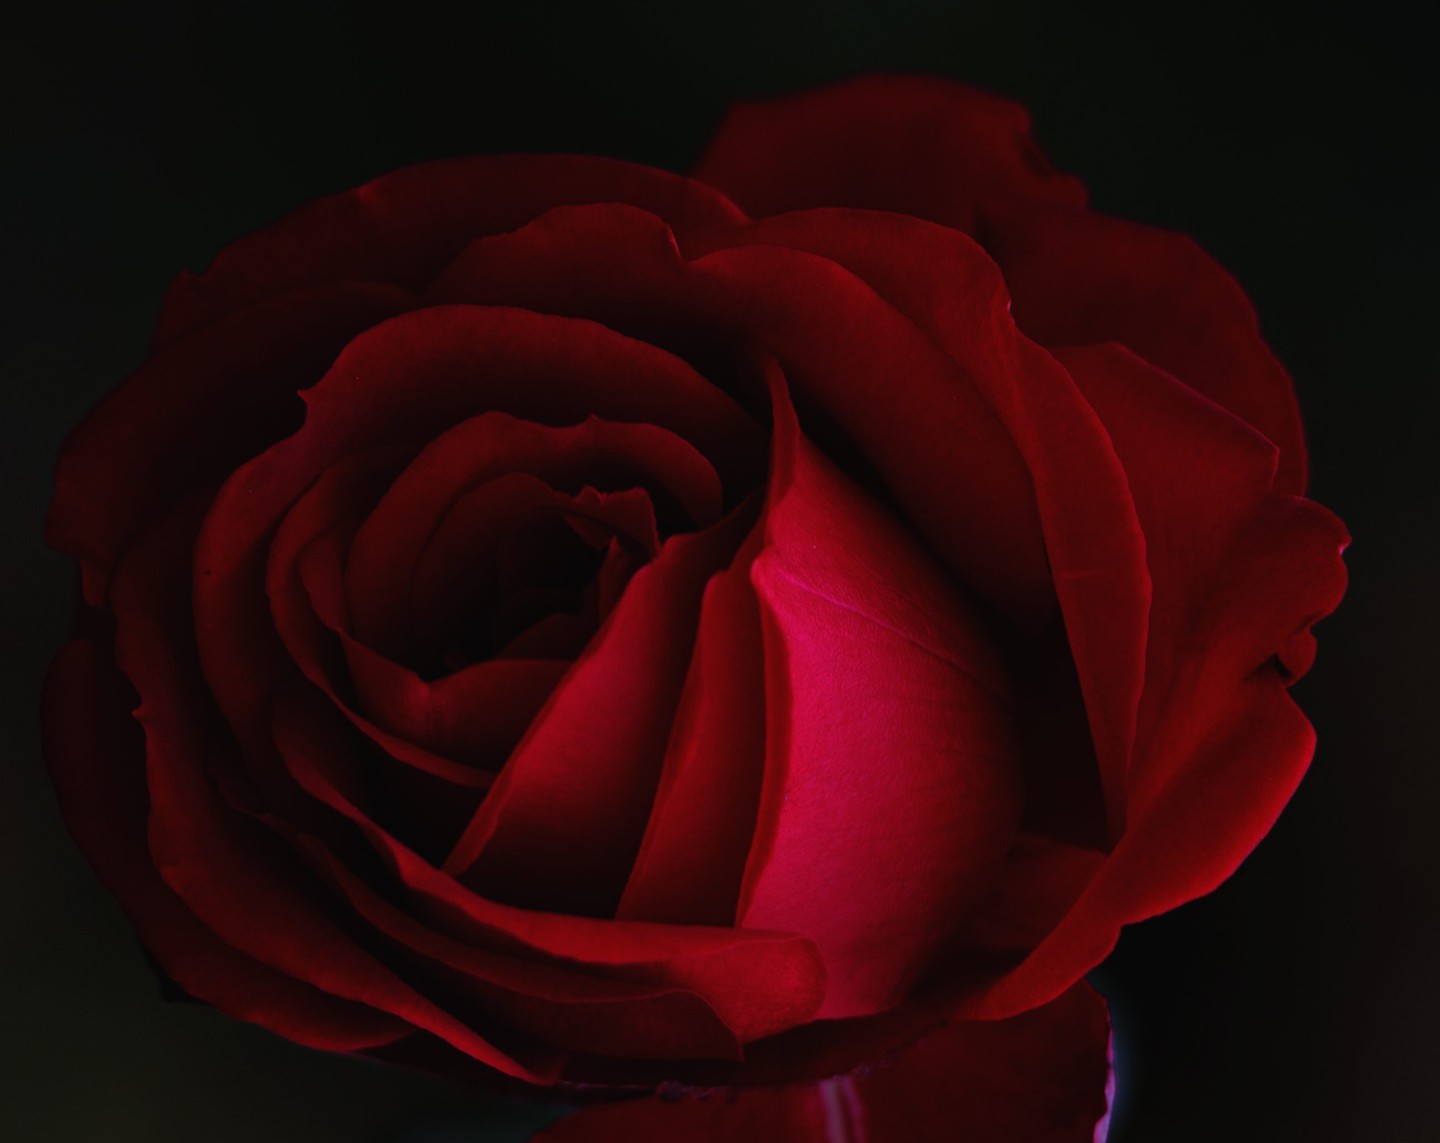 Canva - Red rose close up